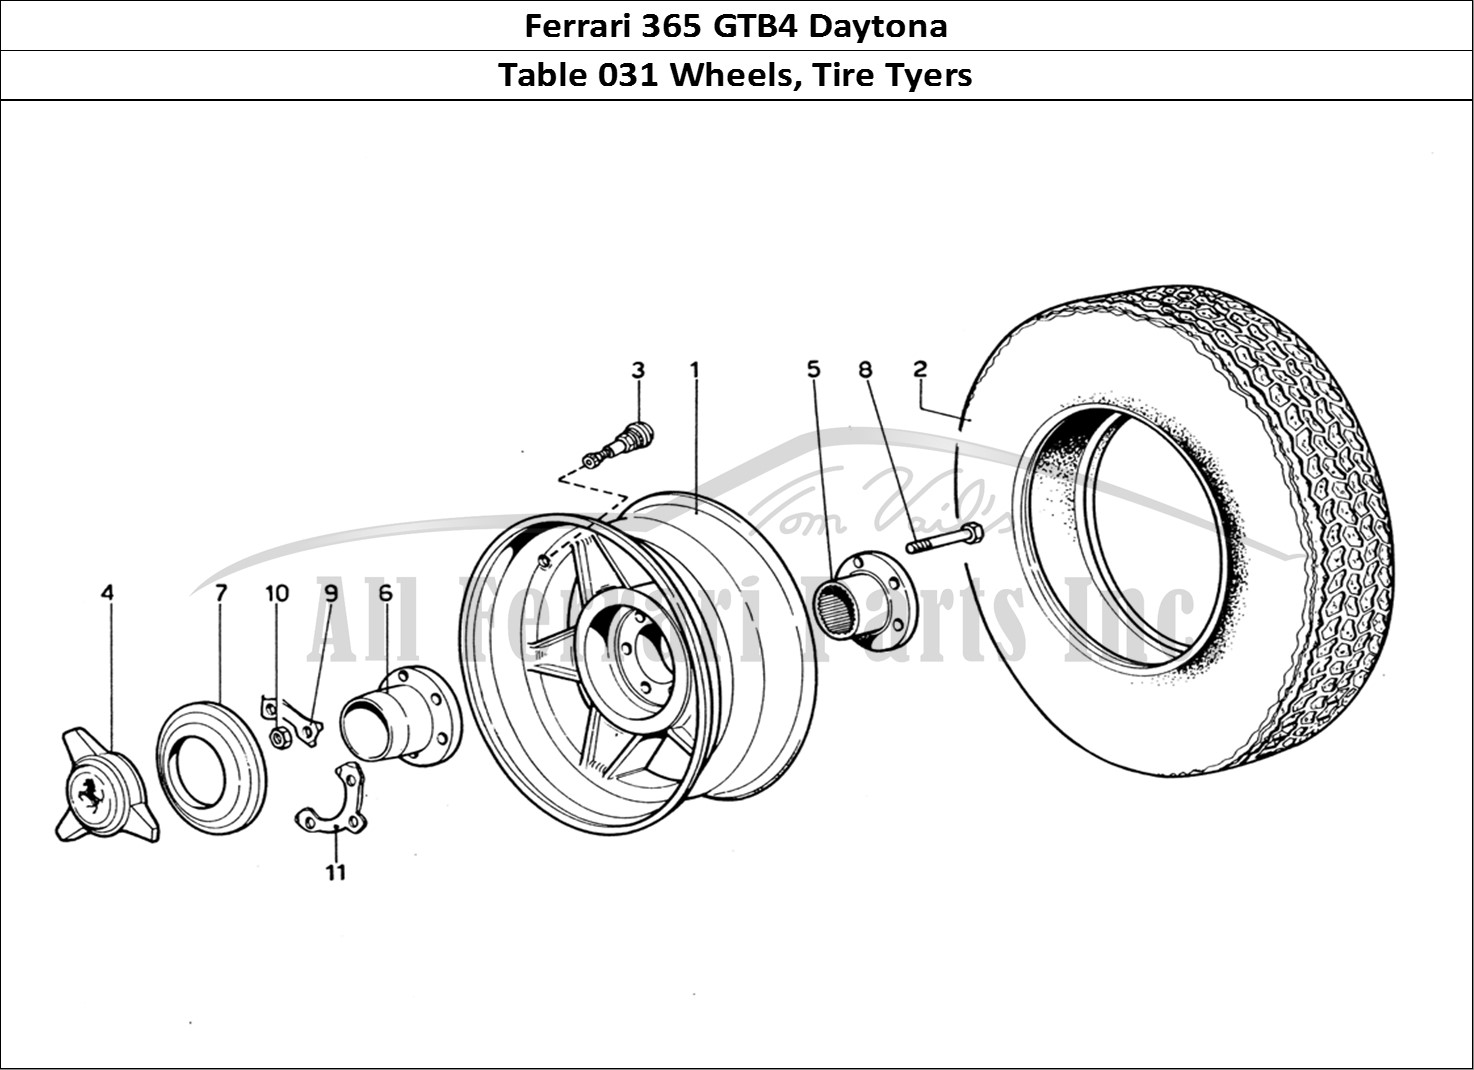 Ferrari Parts Ferrari 365 GTB4 Daytona (1969) Page 031 Wheels & Tyres